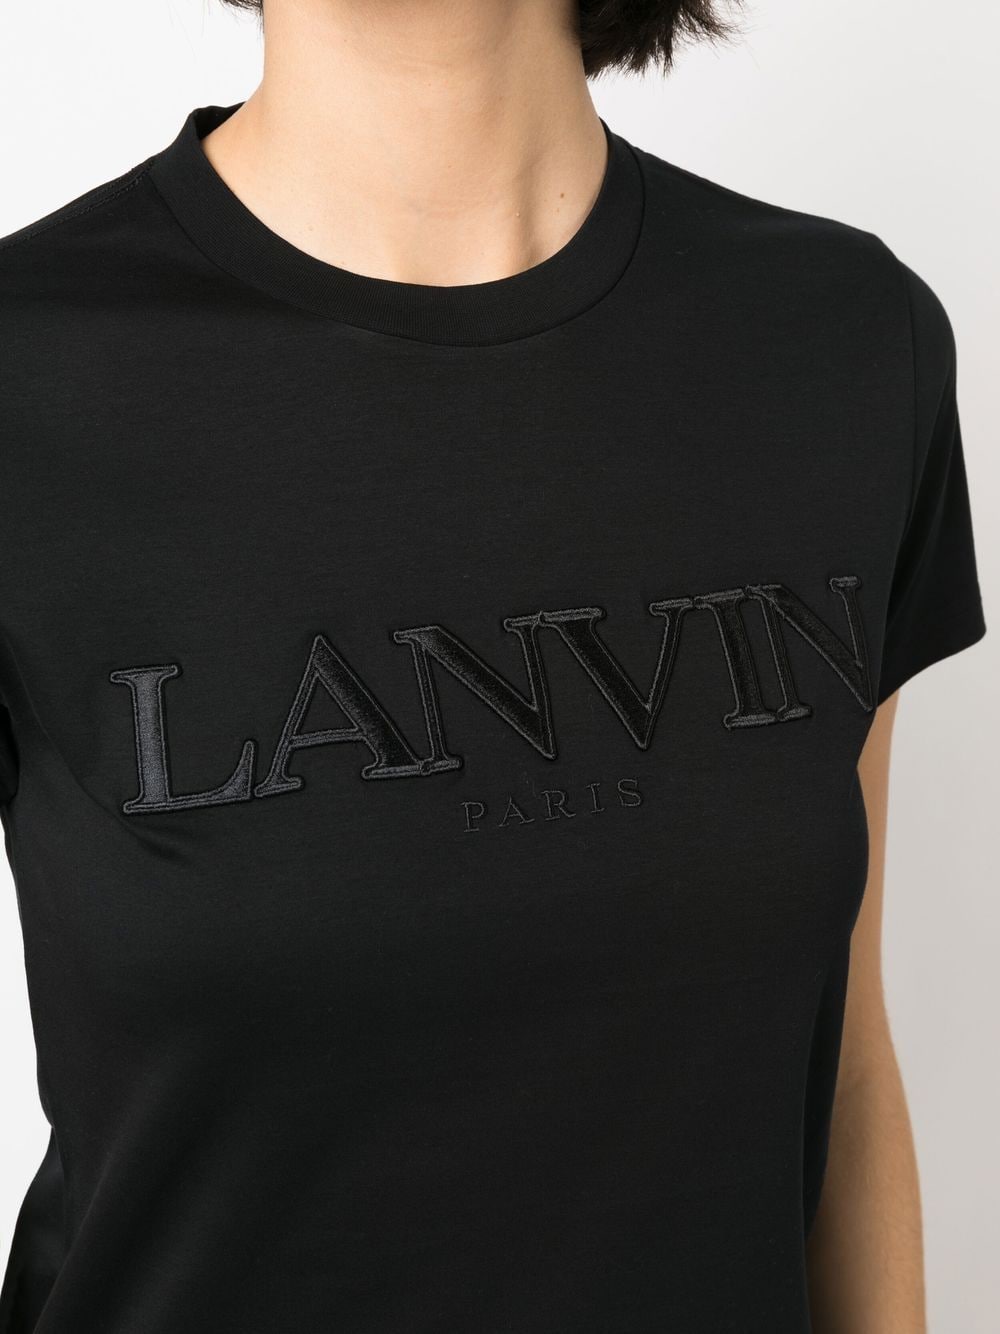 LANVIN  BLACK LOGO T-SHIRT